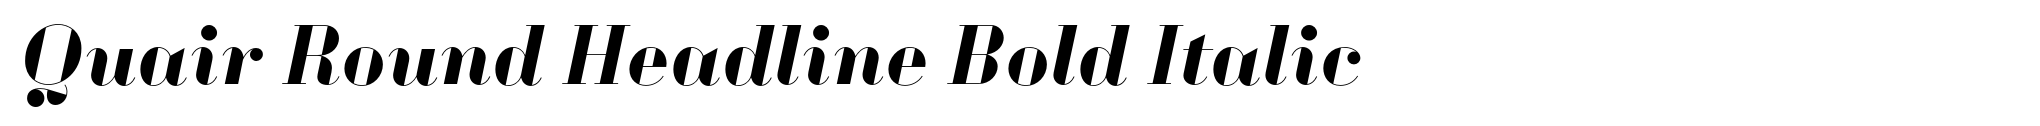 Quair Round Headline Bold Italic image